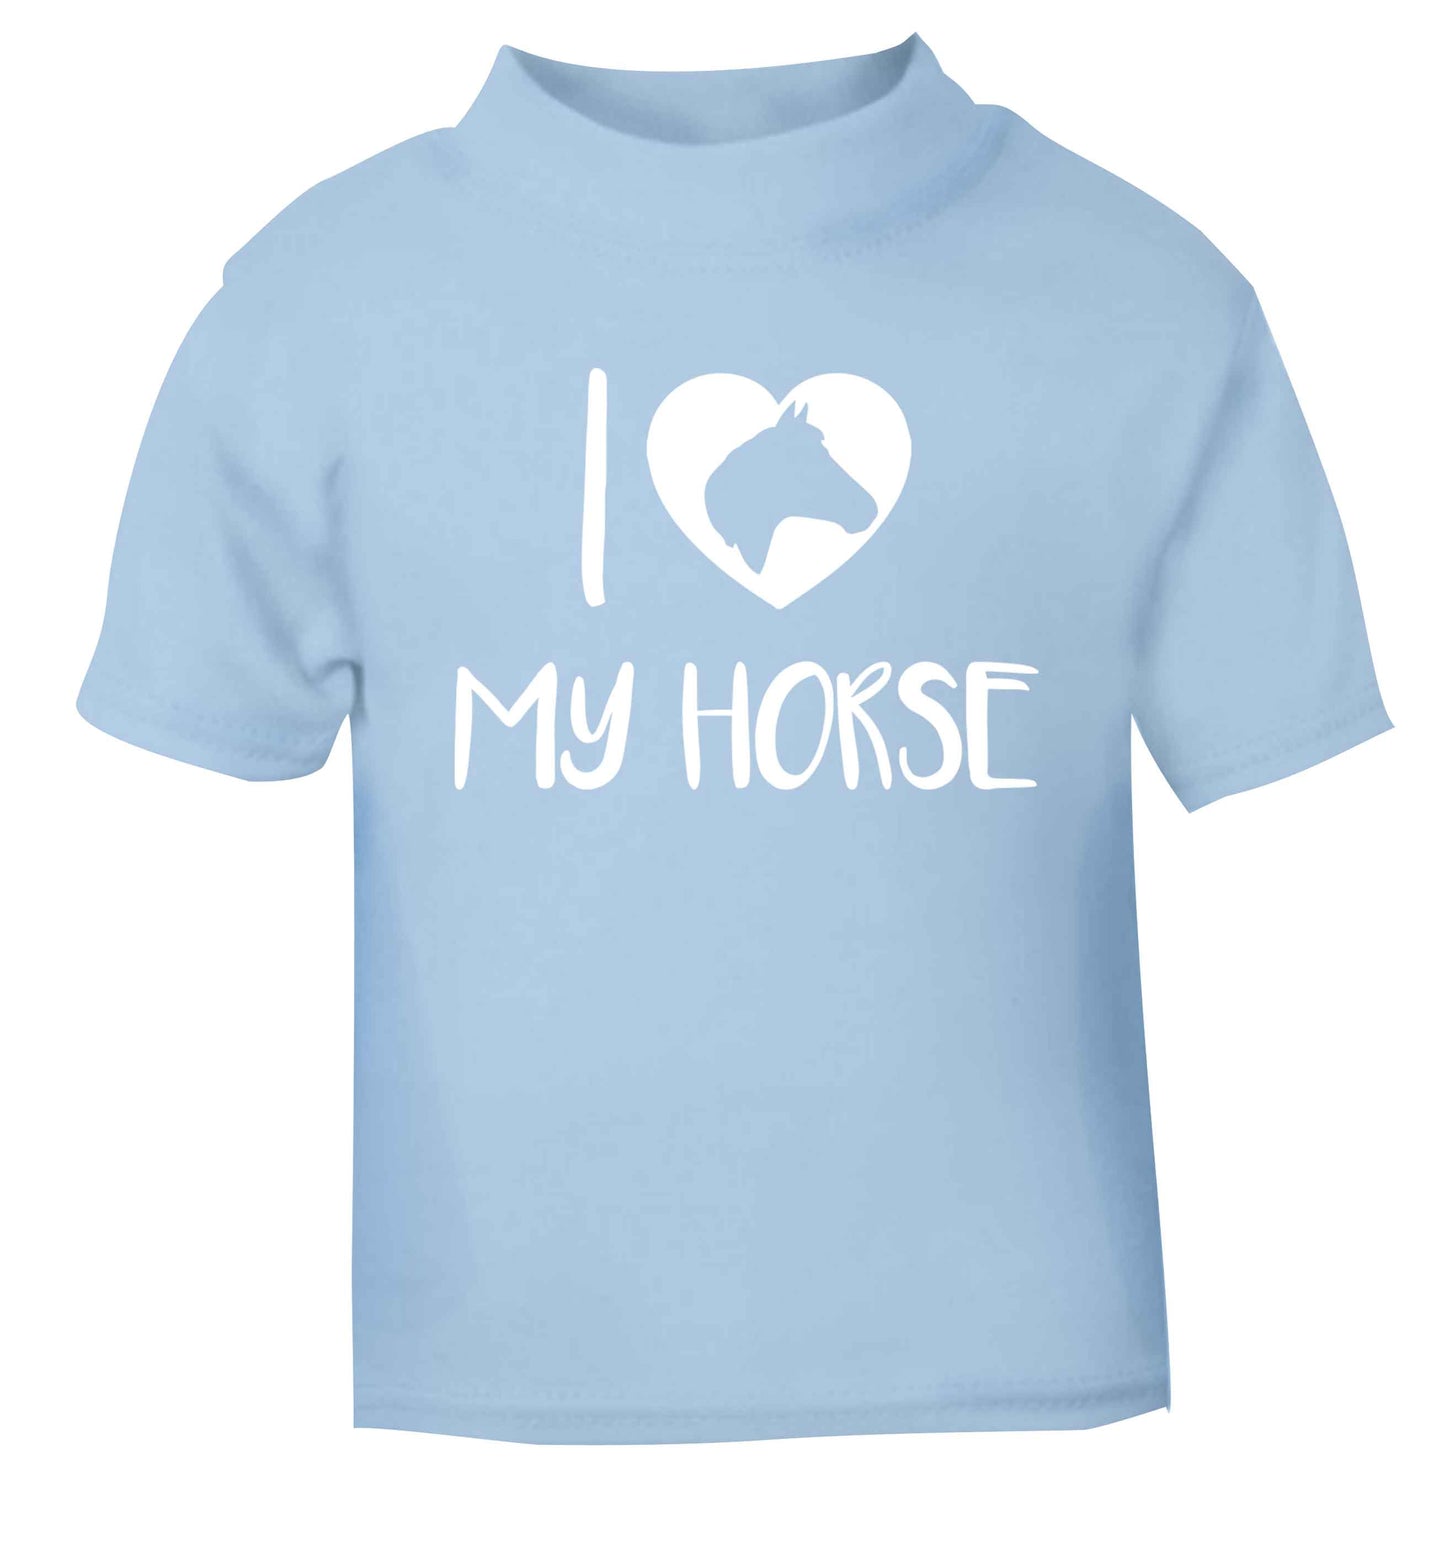 I love my horse light blue baby toddler Tshirt 2 Years